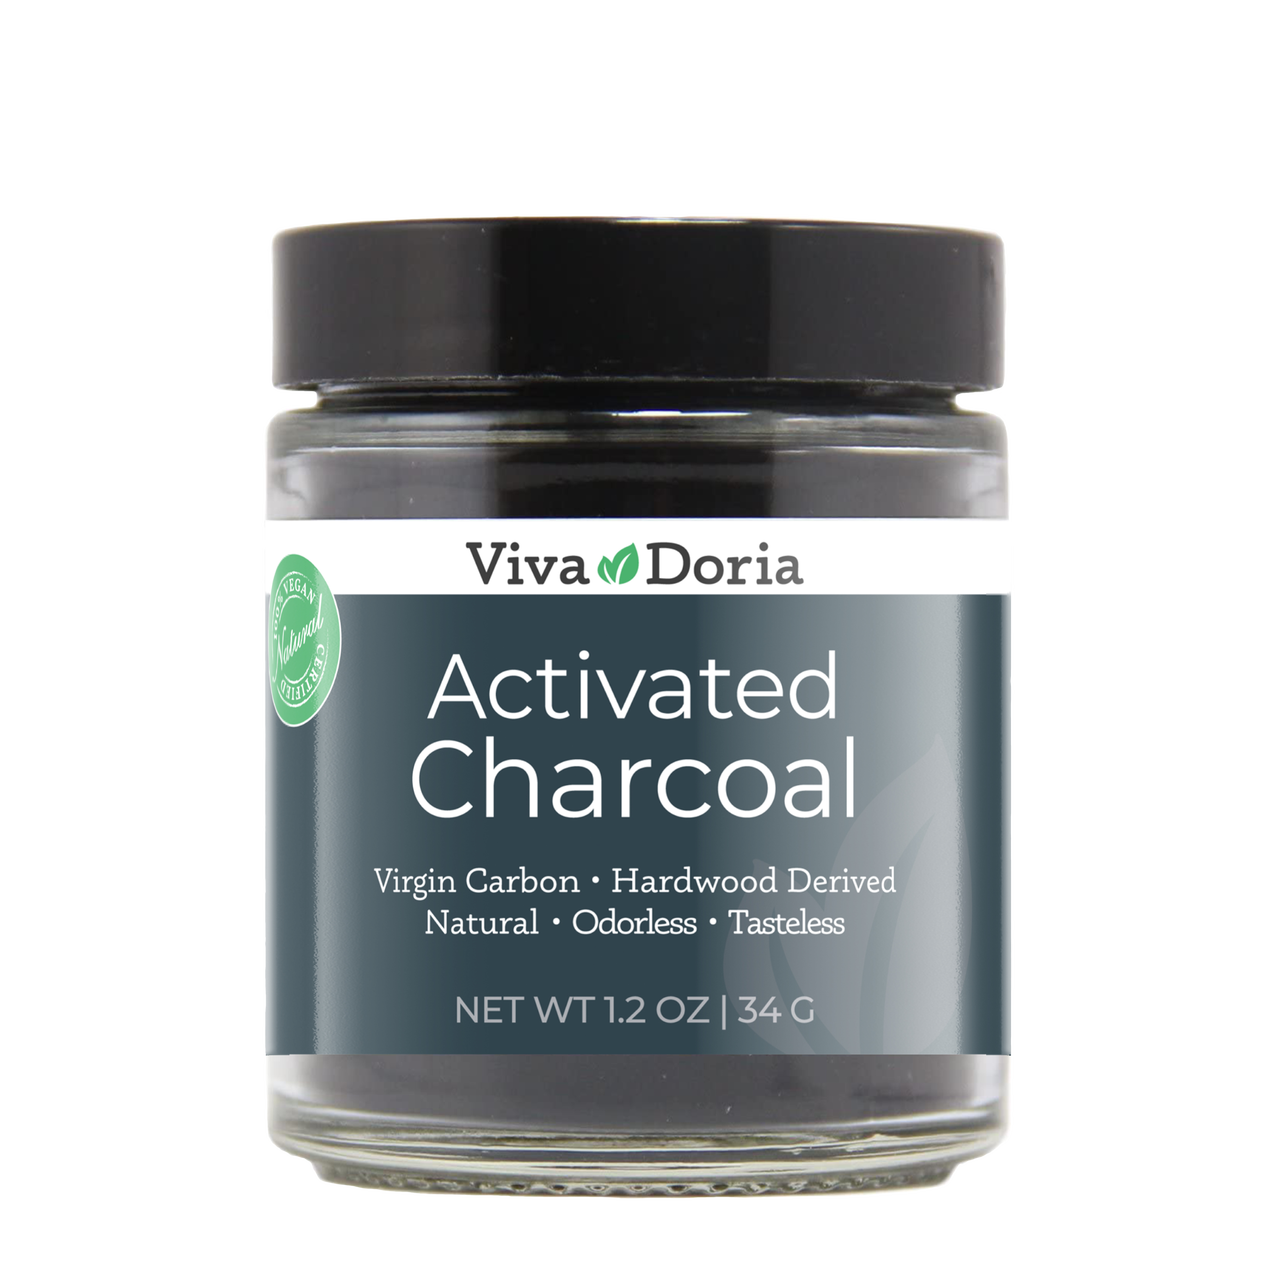 Vivadoria's activated virgin charcoal